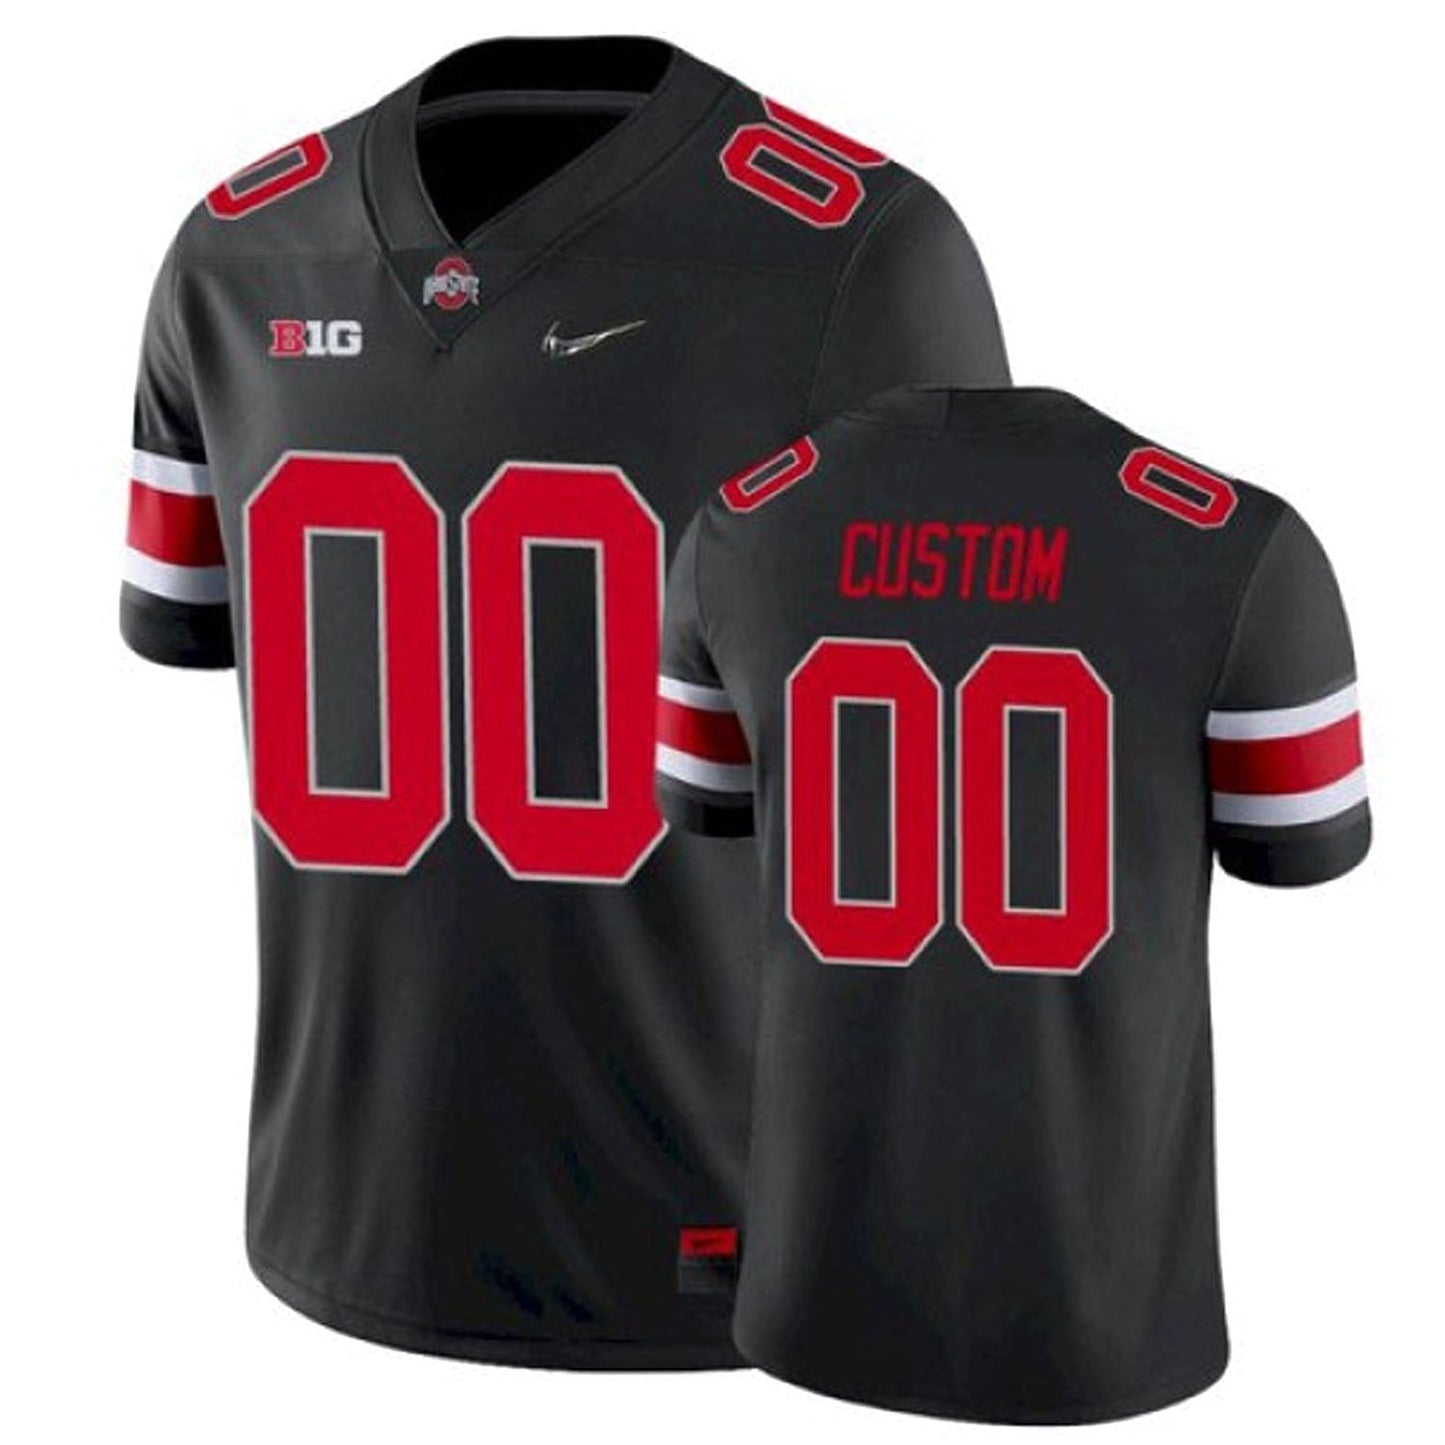 NCAAF Ohio State Buckeyes Custom Jersey